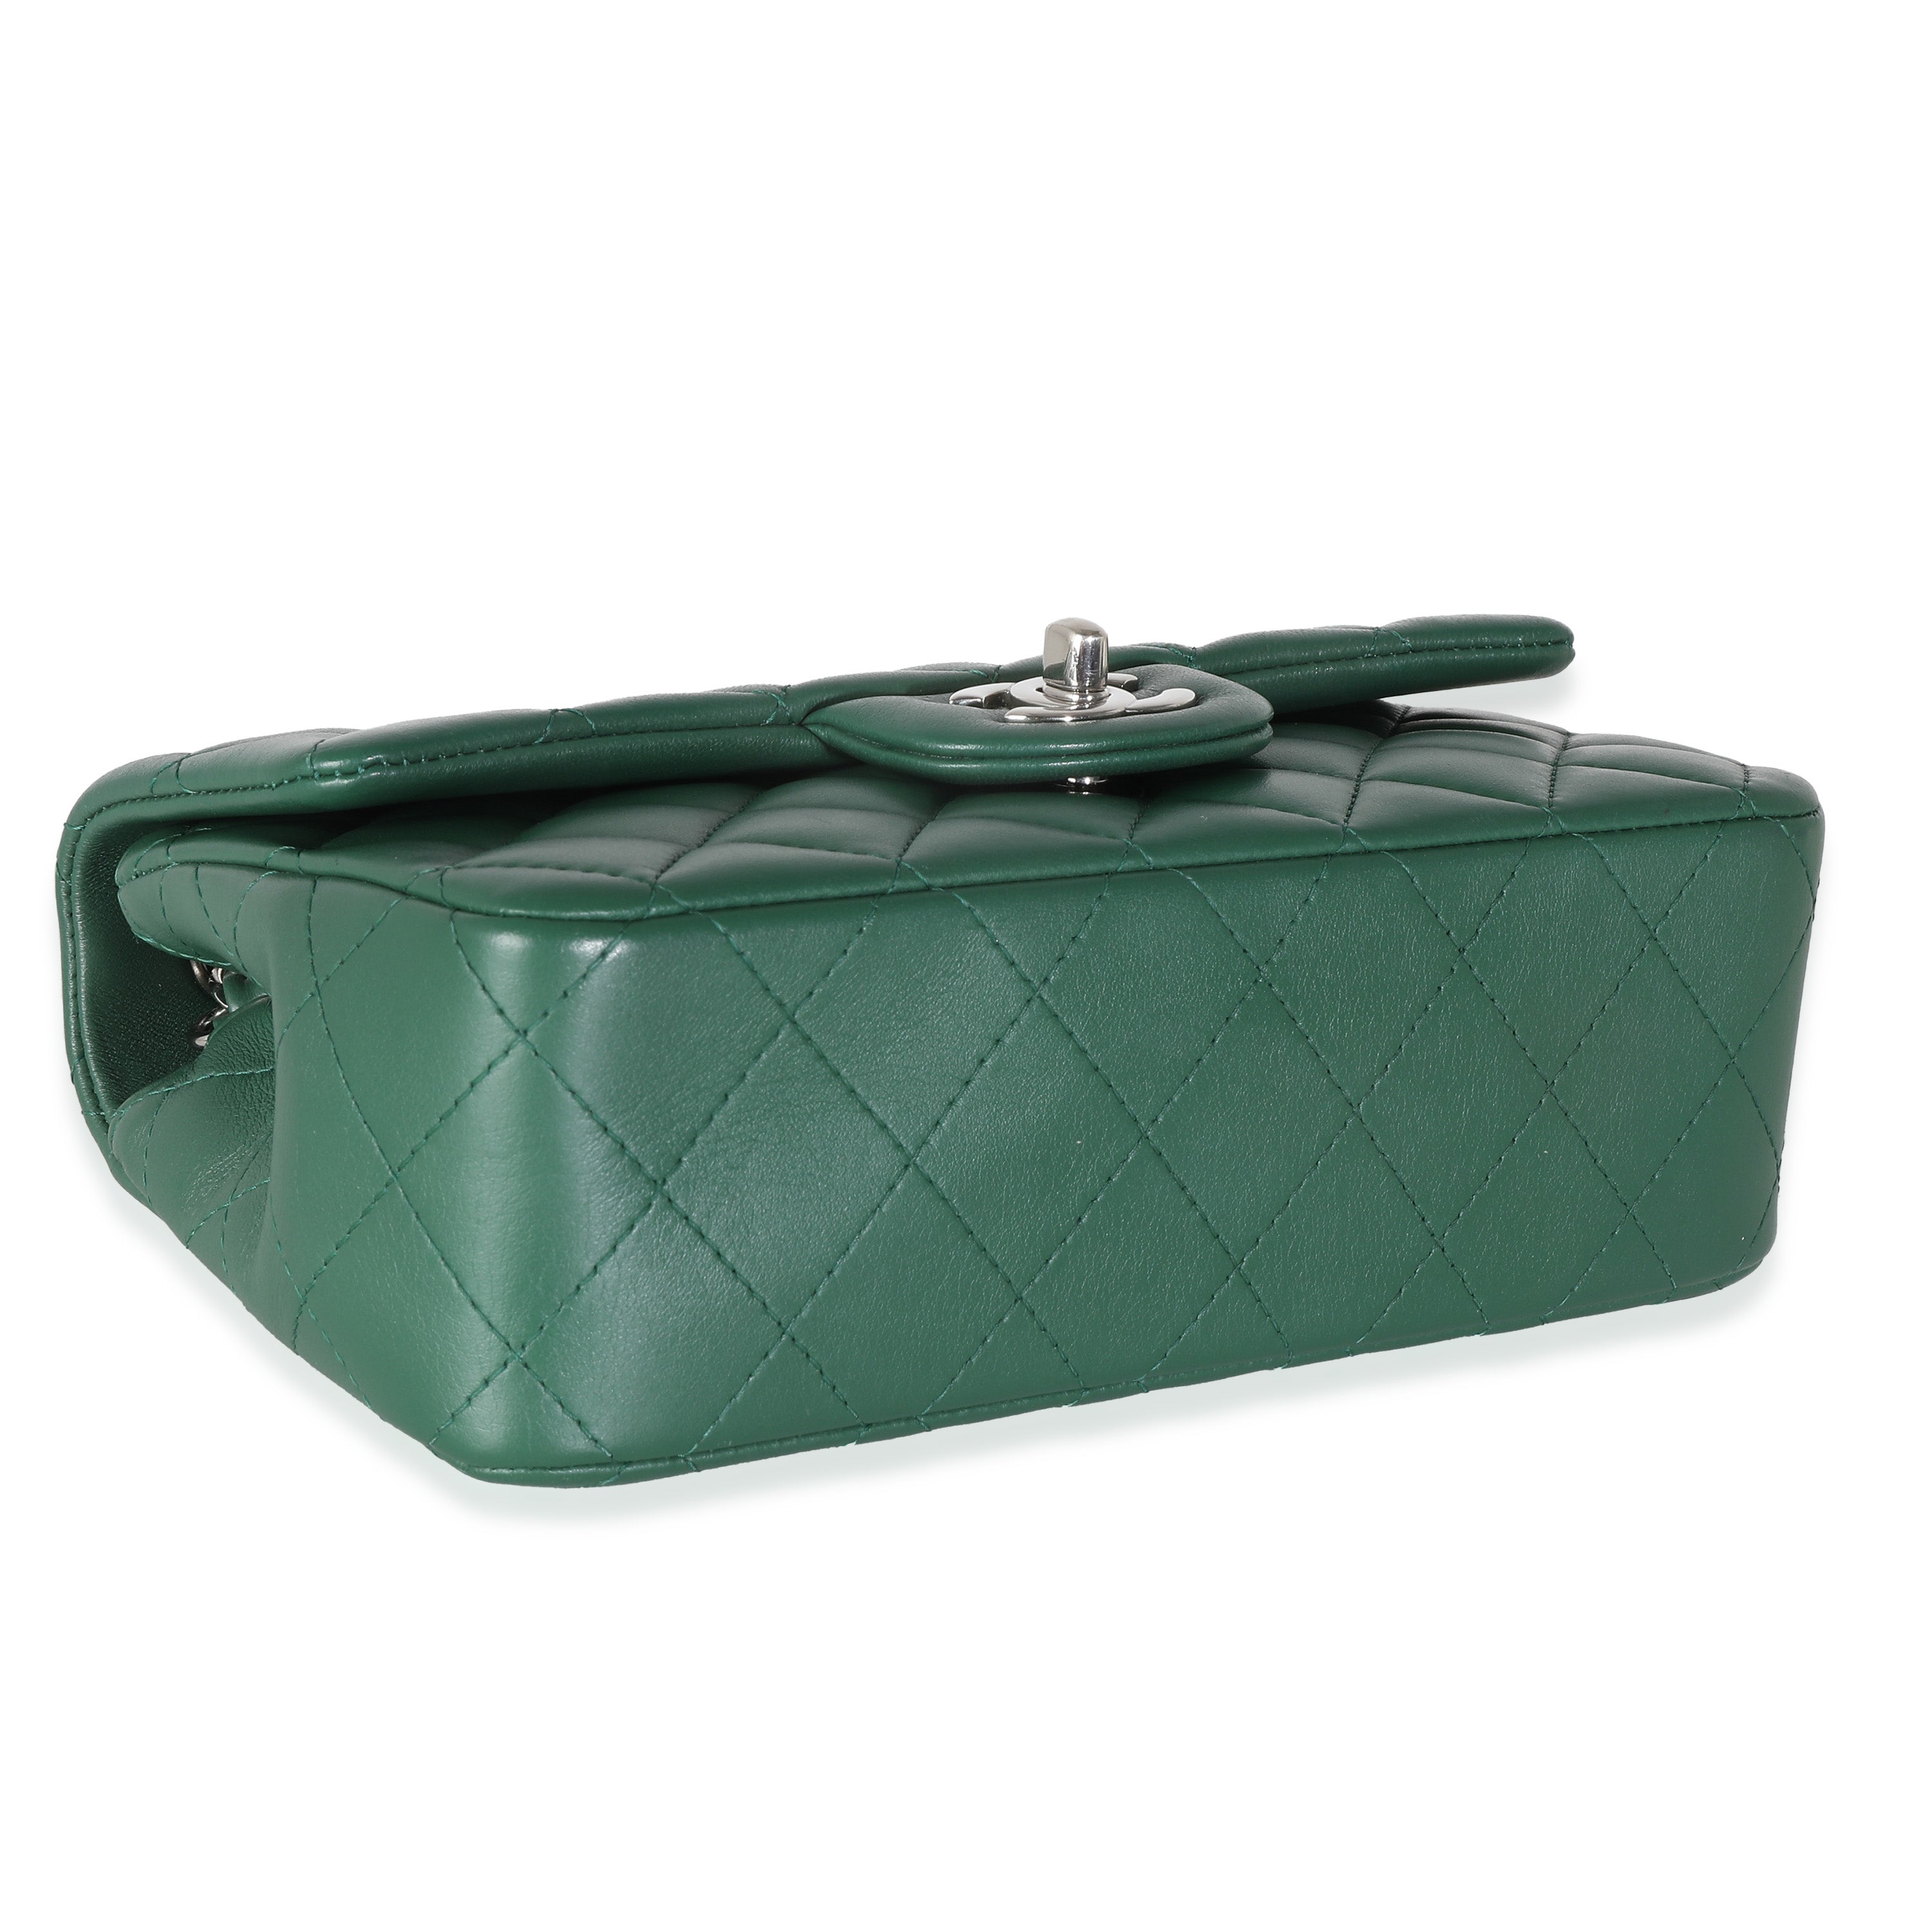 Chanel Dark Green Quilted Lambskin Mini Rectangular Flap Bag